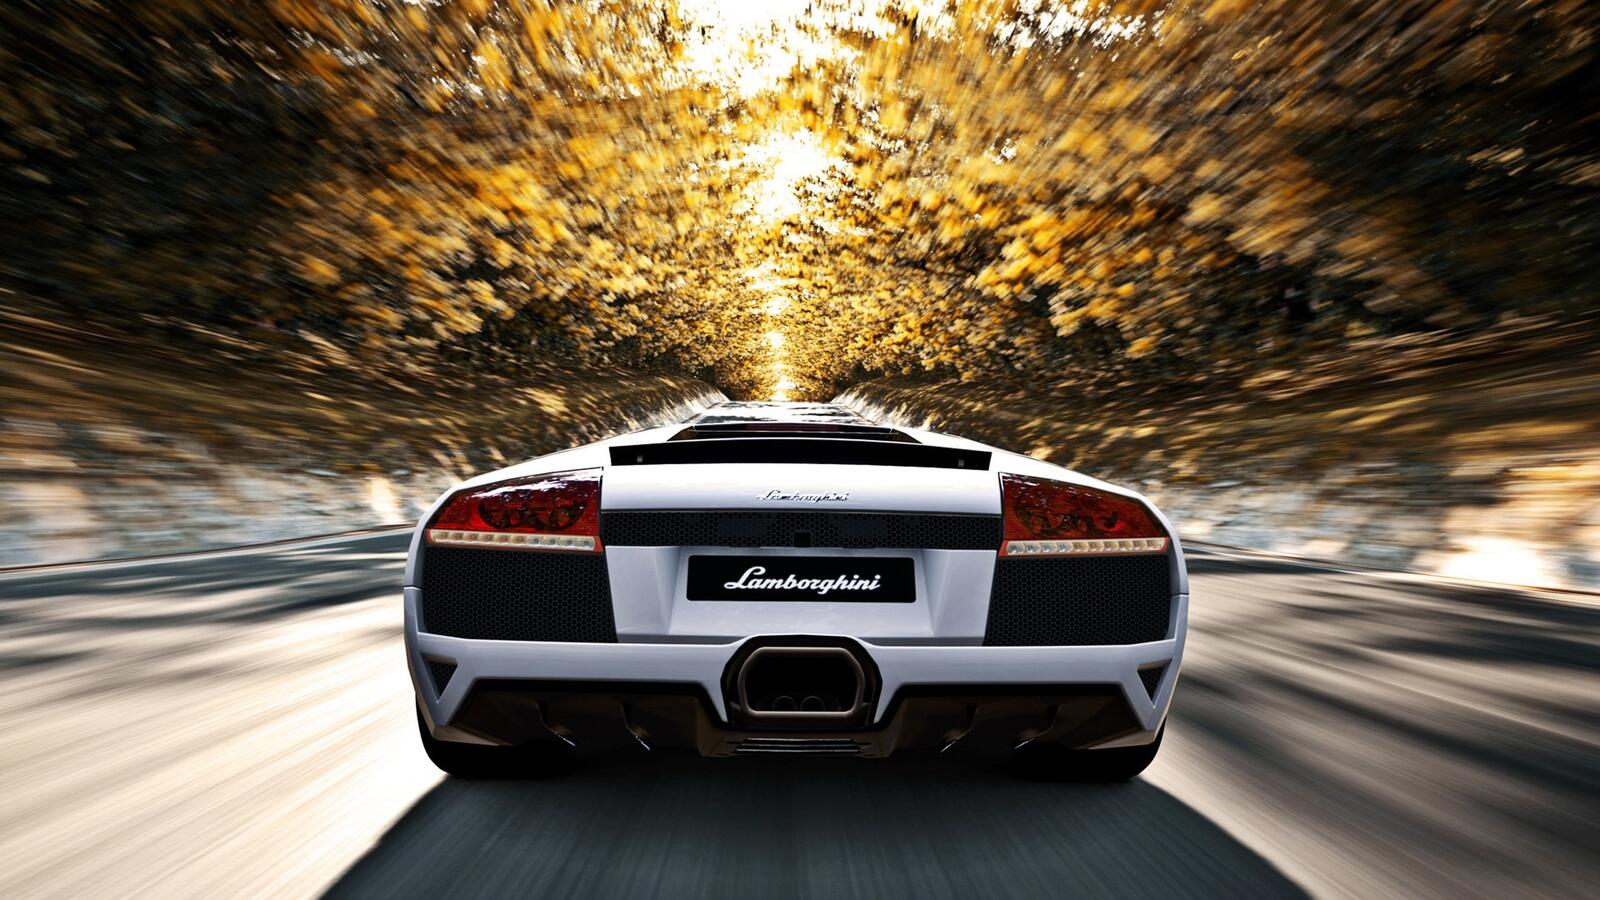 Wallpapers Lamborghini Gran Turismo 5 back view on the desktop